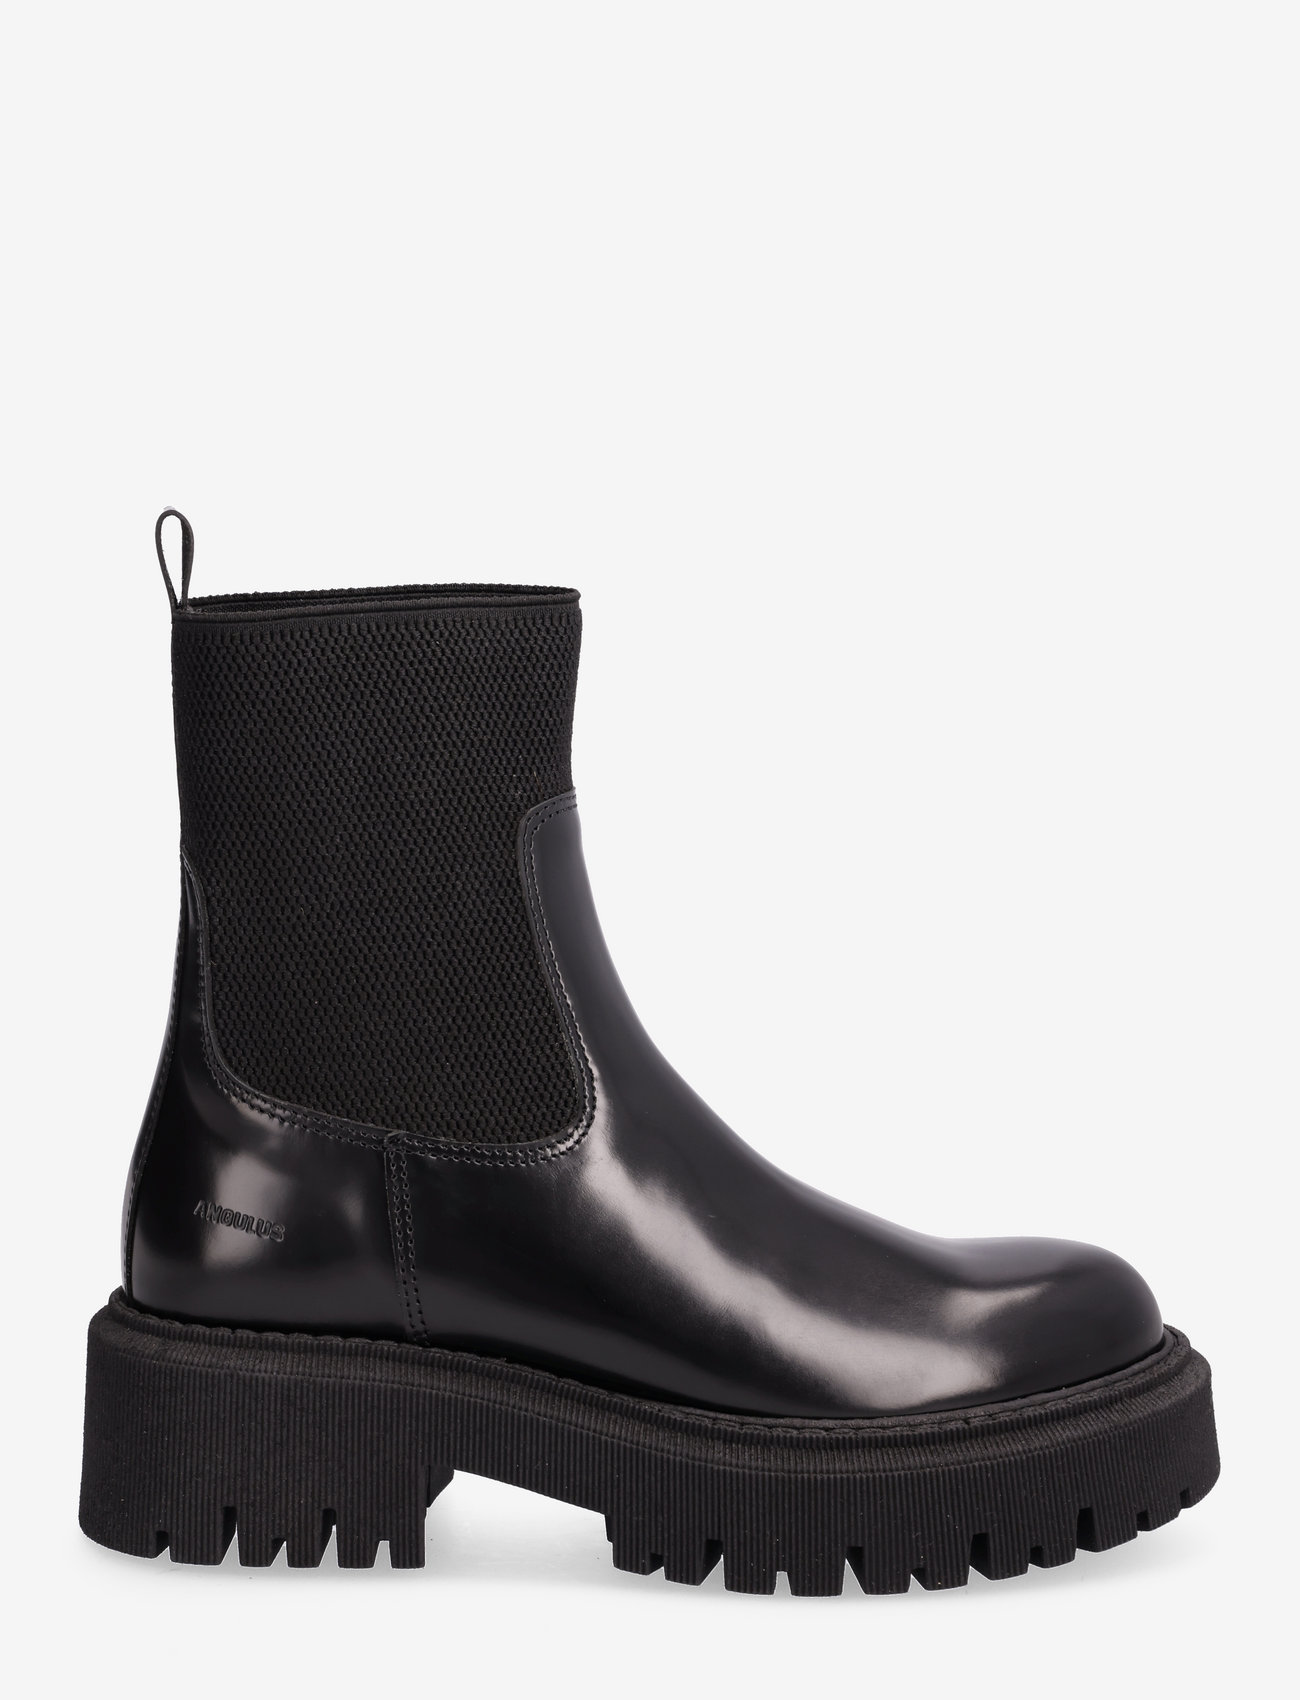 ANGULUS - Boots - flat - flache stiefeletten - 1425/053 black/black - 1